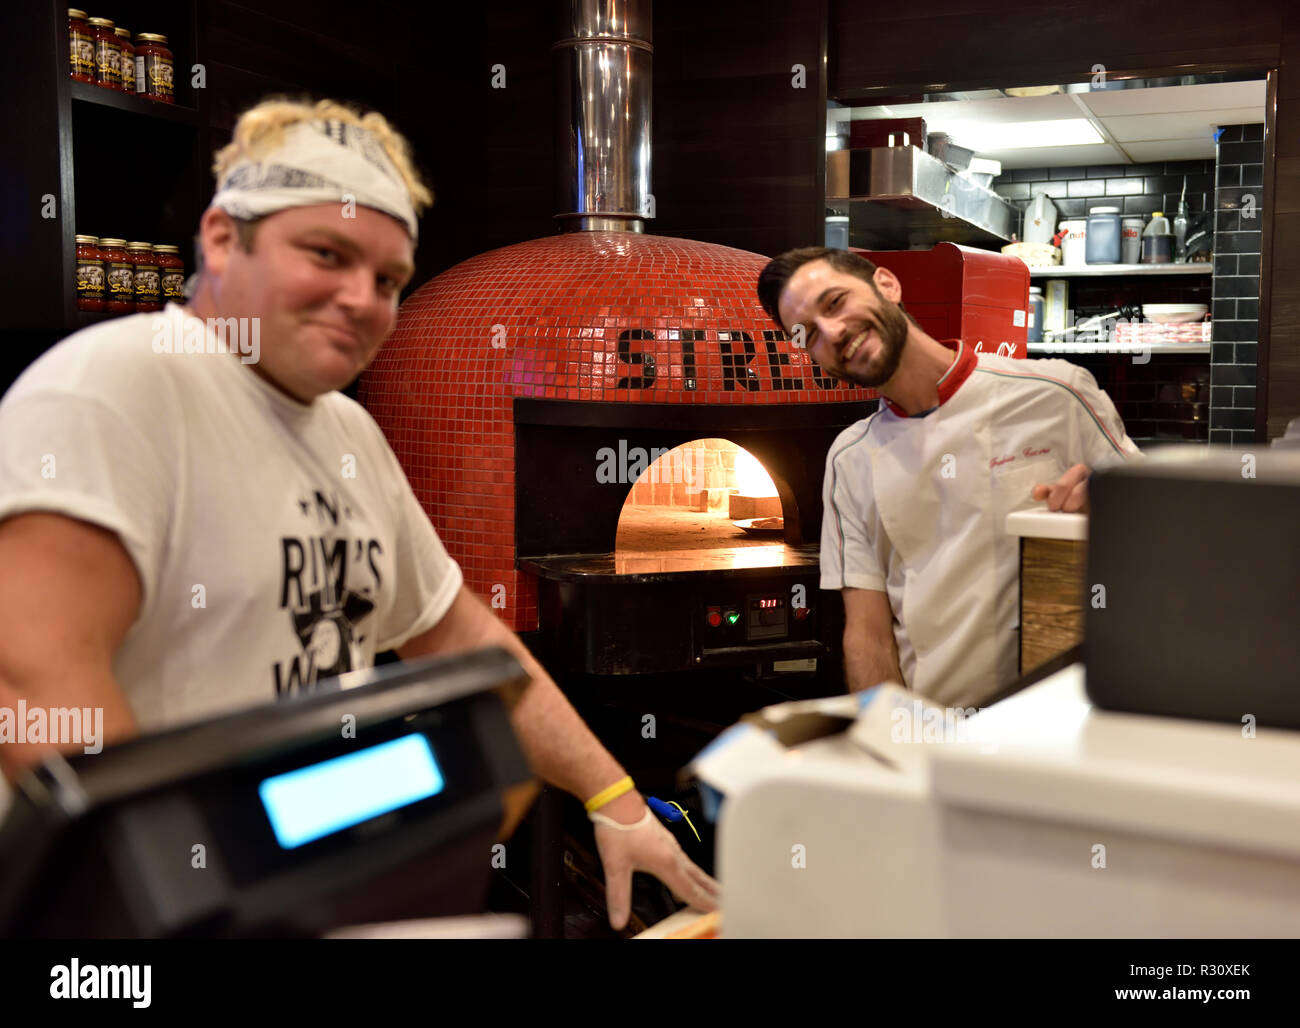 Pizza kitchen with chefs and oven, Rina's Pizzeria & Cafe, Italian quarter downtown Boston, Massachusetts, USA Stock Photo